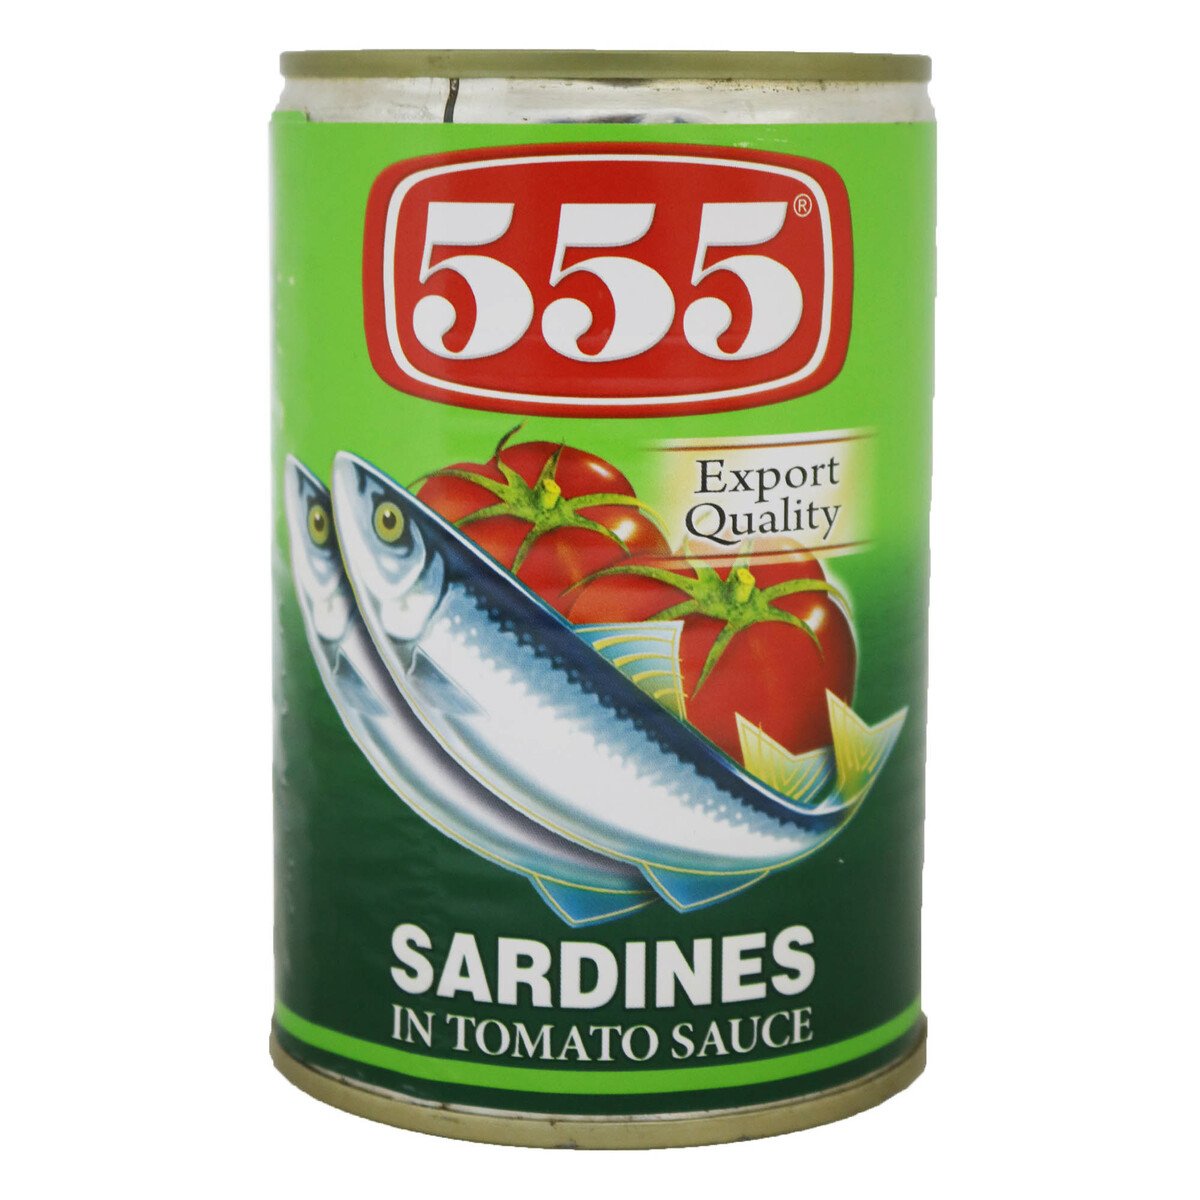 555 Sardines In Tomato Sauce Green 425g